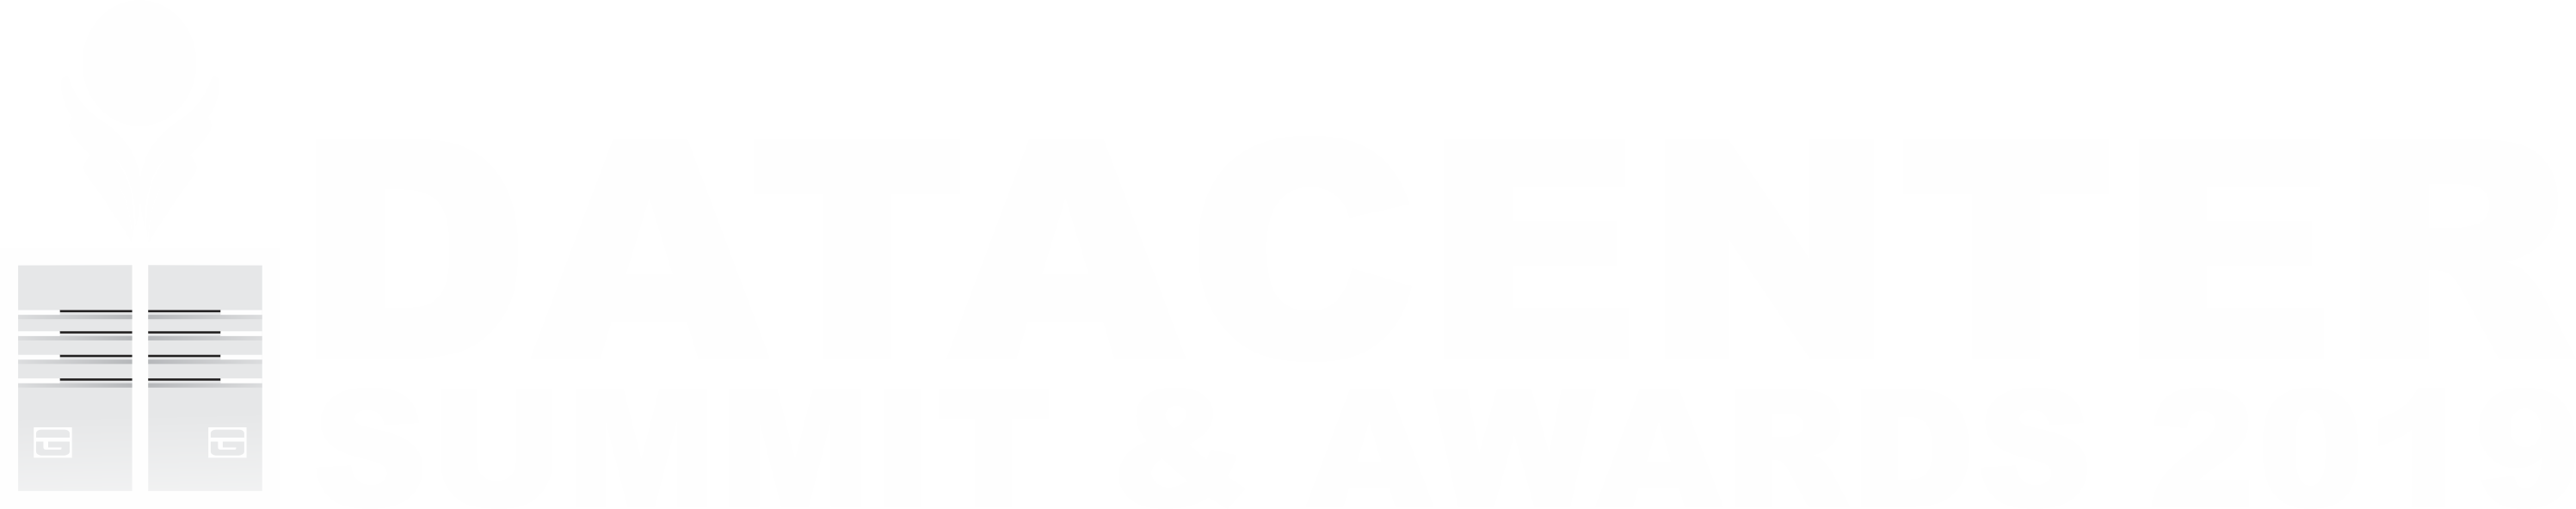 DataCenter Summit and Awards 2018